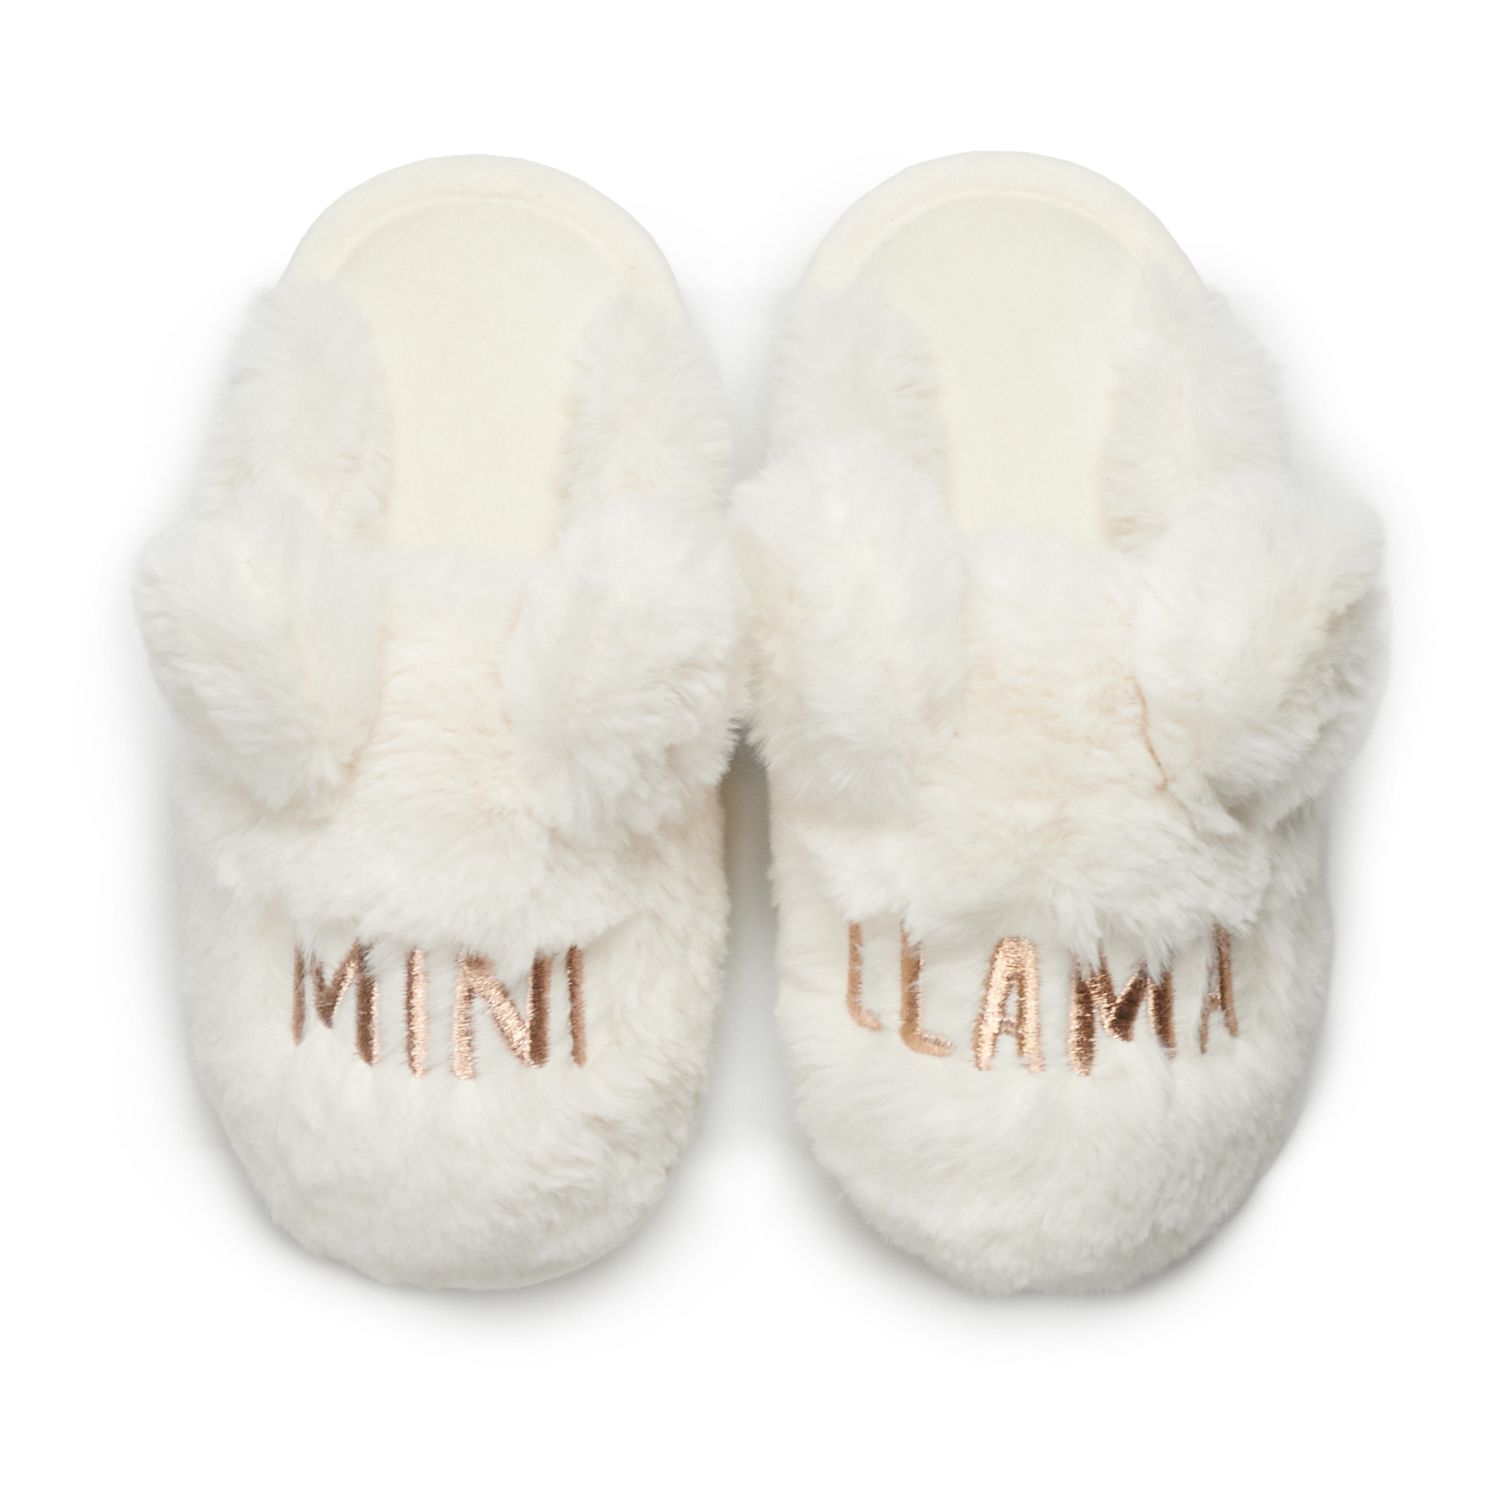 llama slippers kids